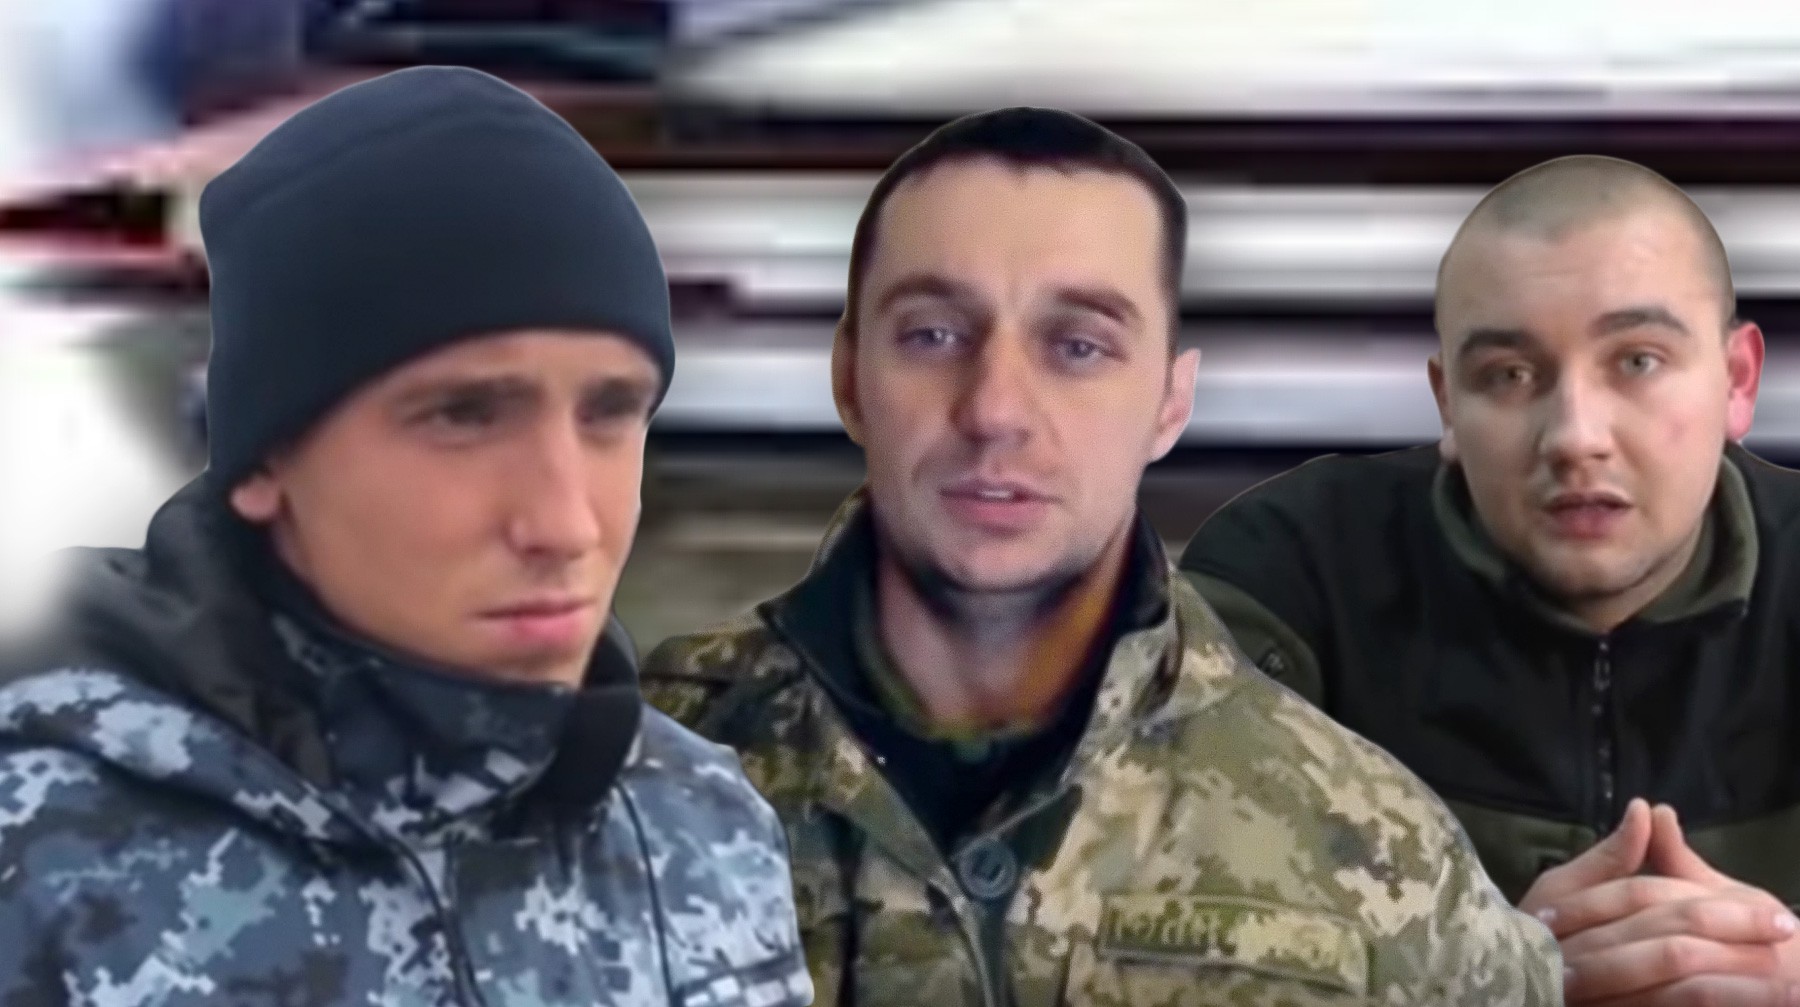 Dailystorm - ФСБ опубликовала изъятые у украинских моряков документы